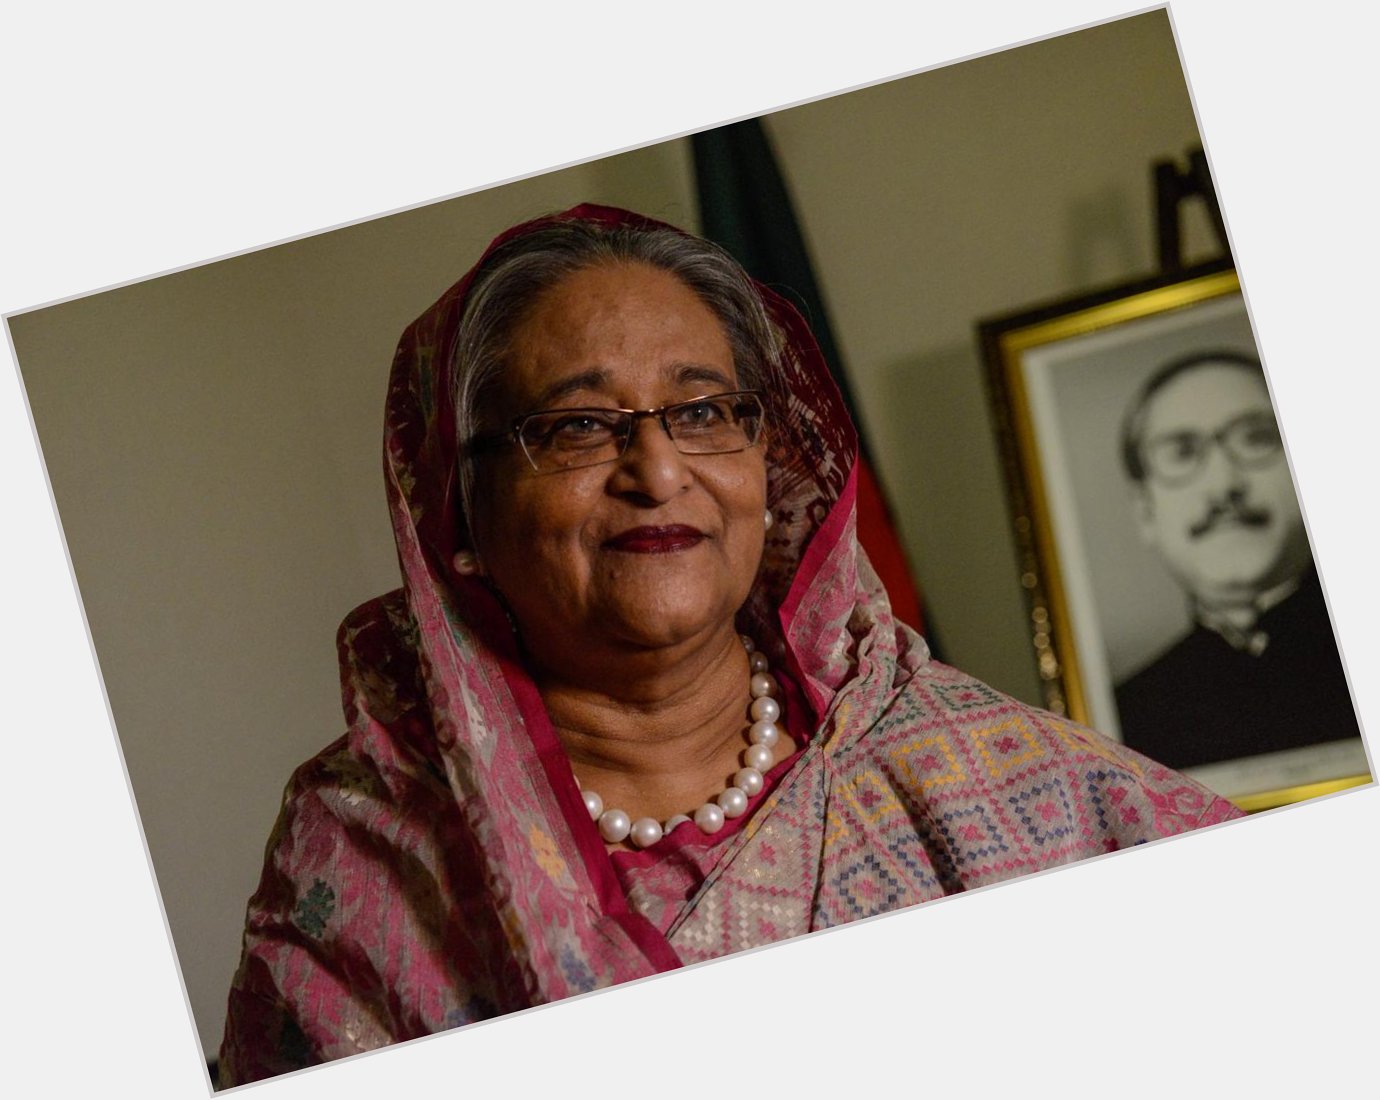 Happy birthday to Prime Minister of Bangladesh Sheikh Hasina 